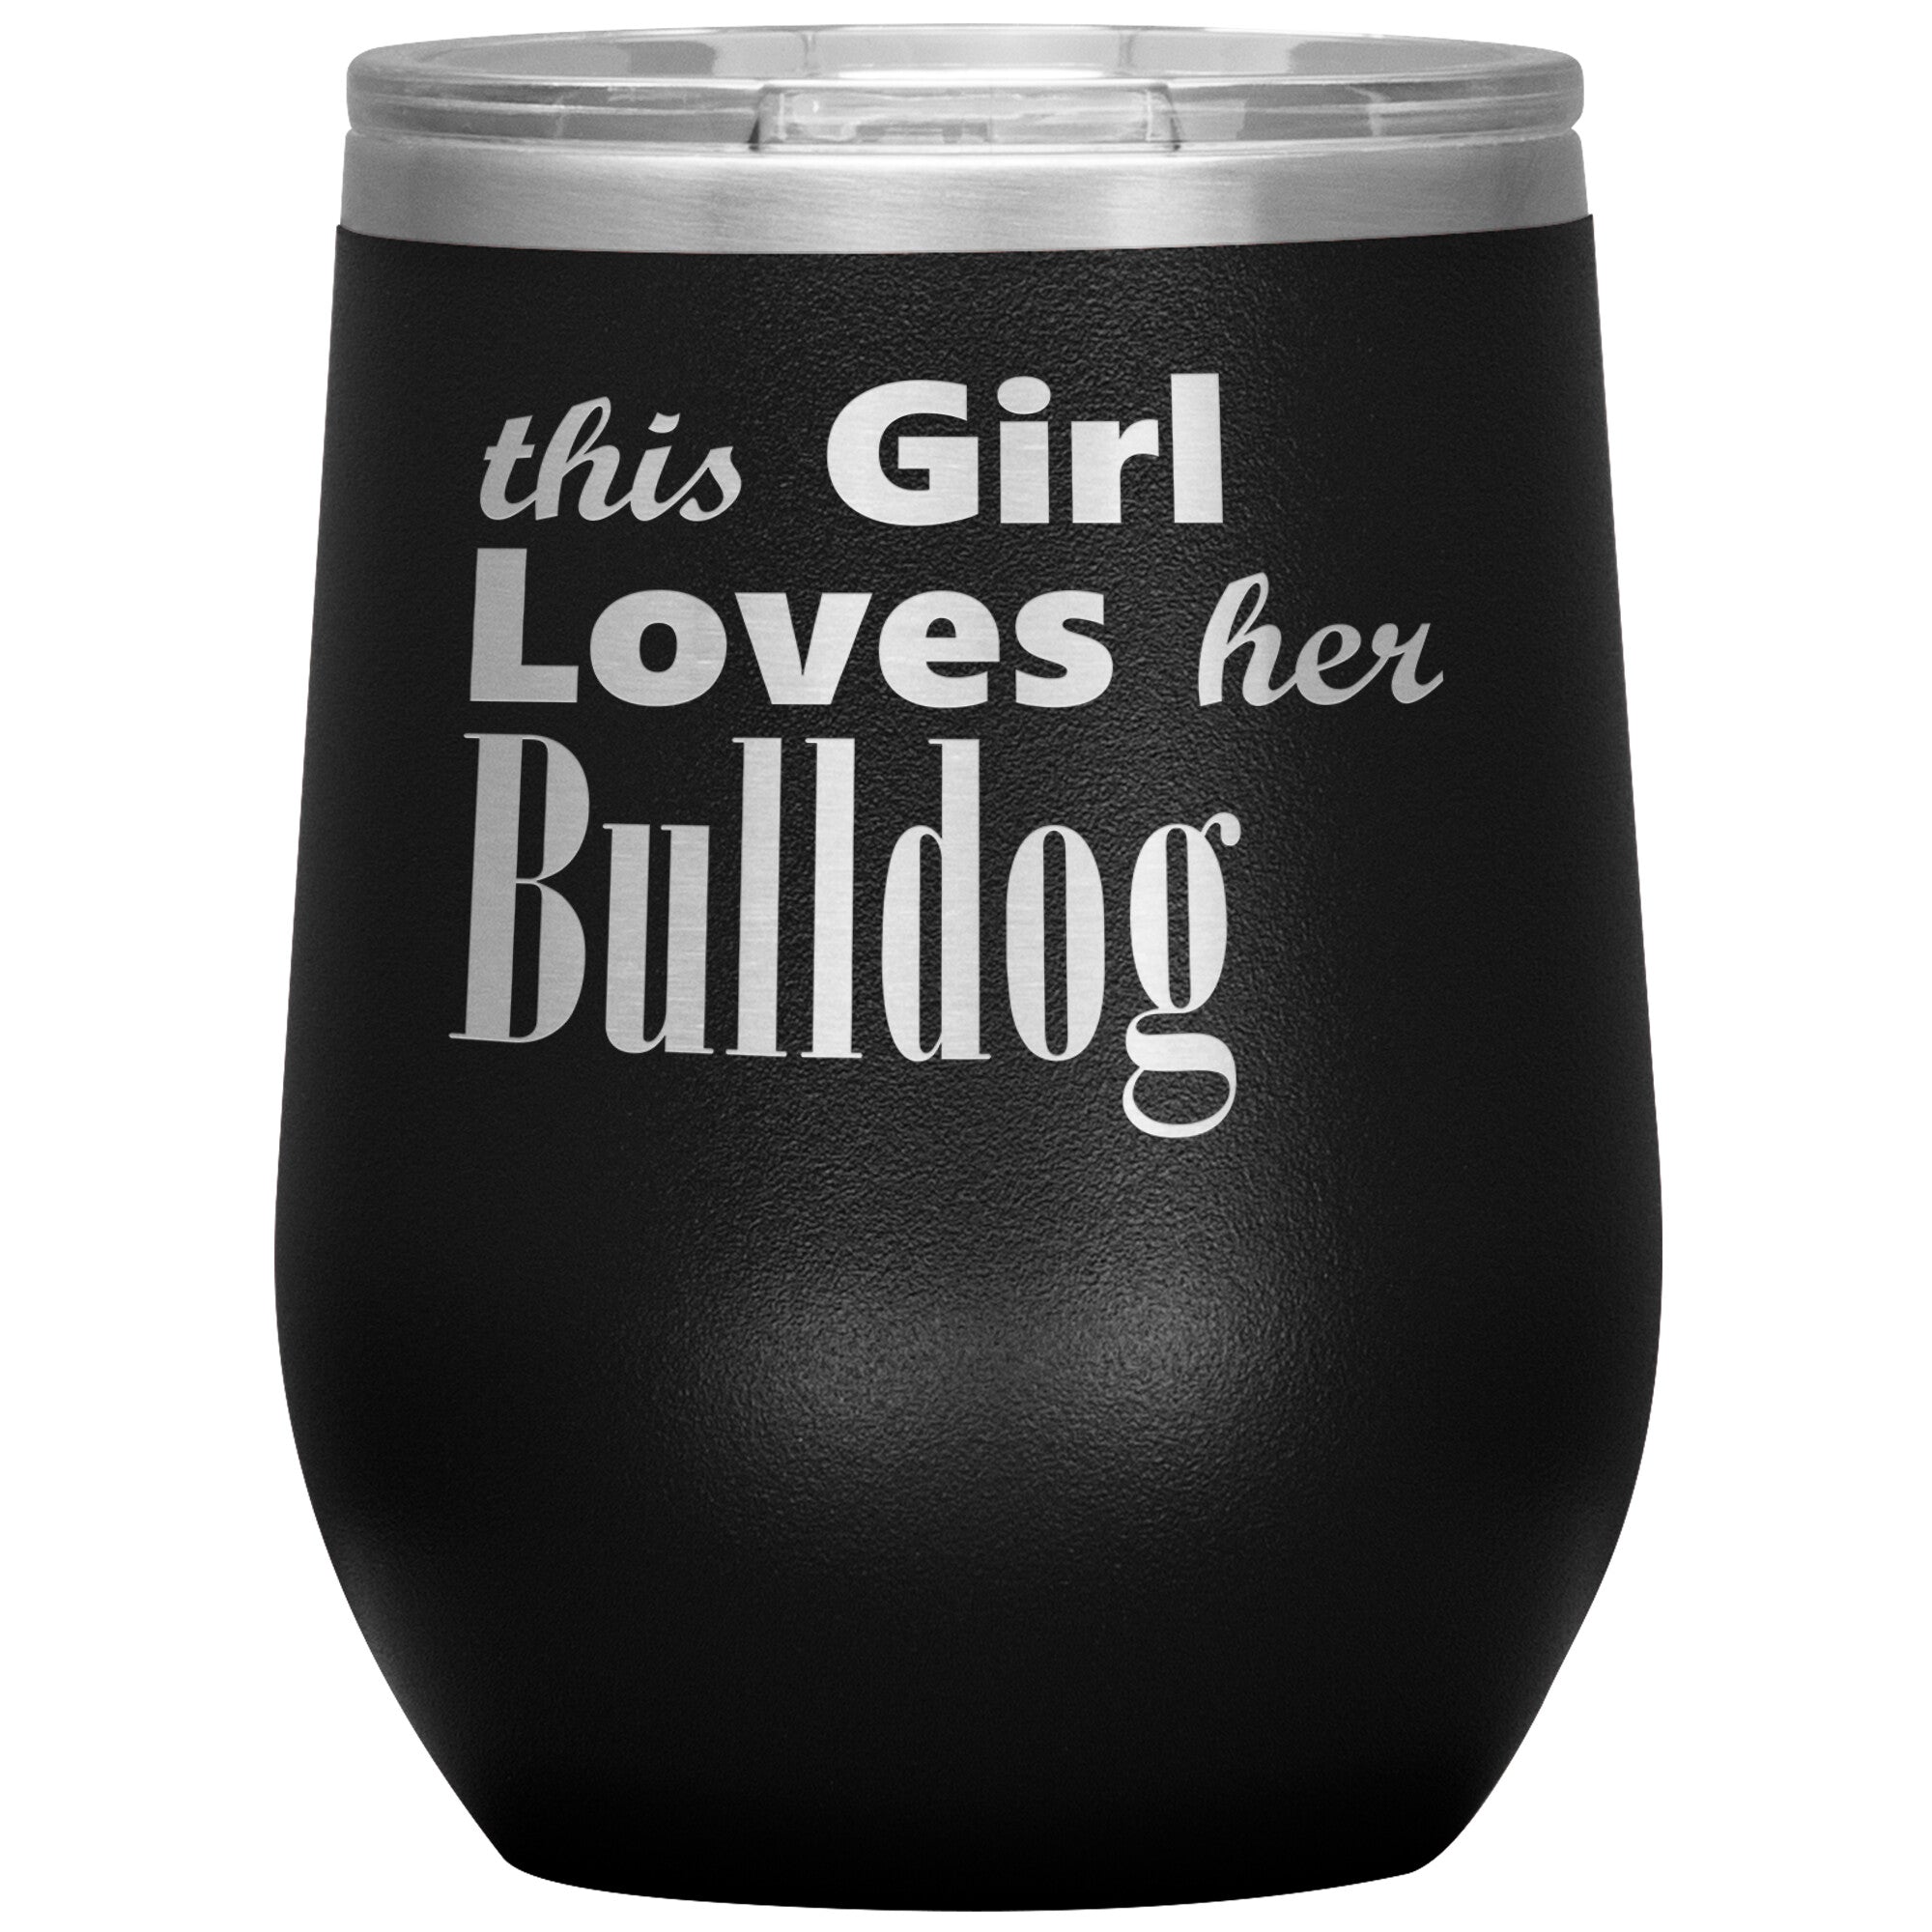 Bulldog - 12oz Insulated Wine Tumbler